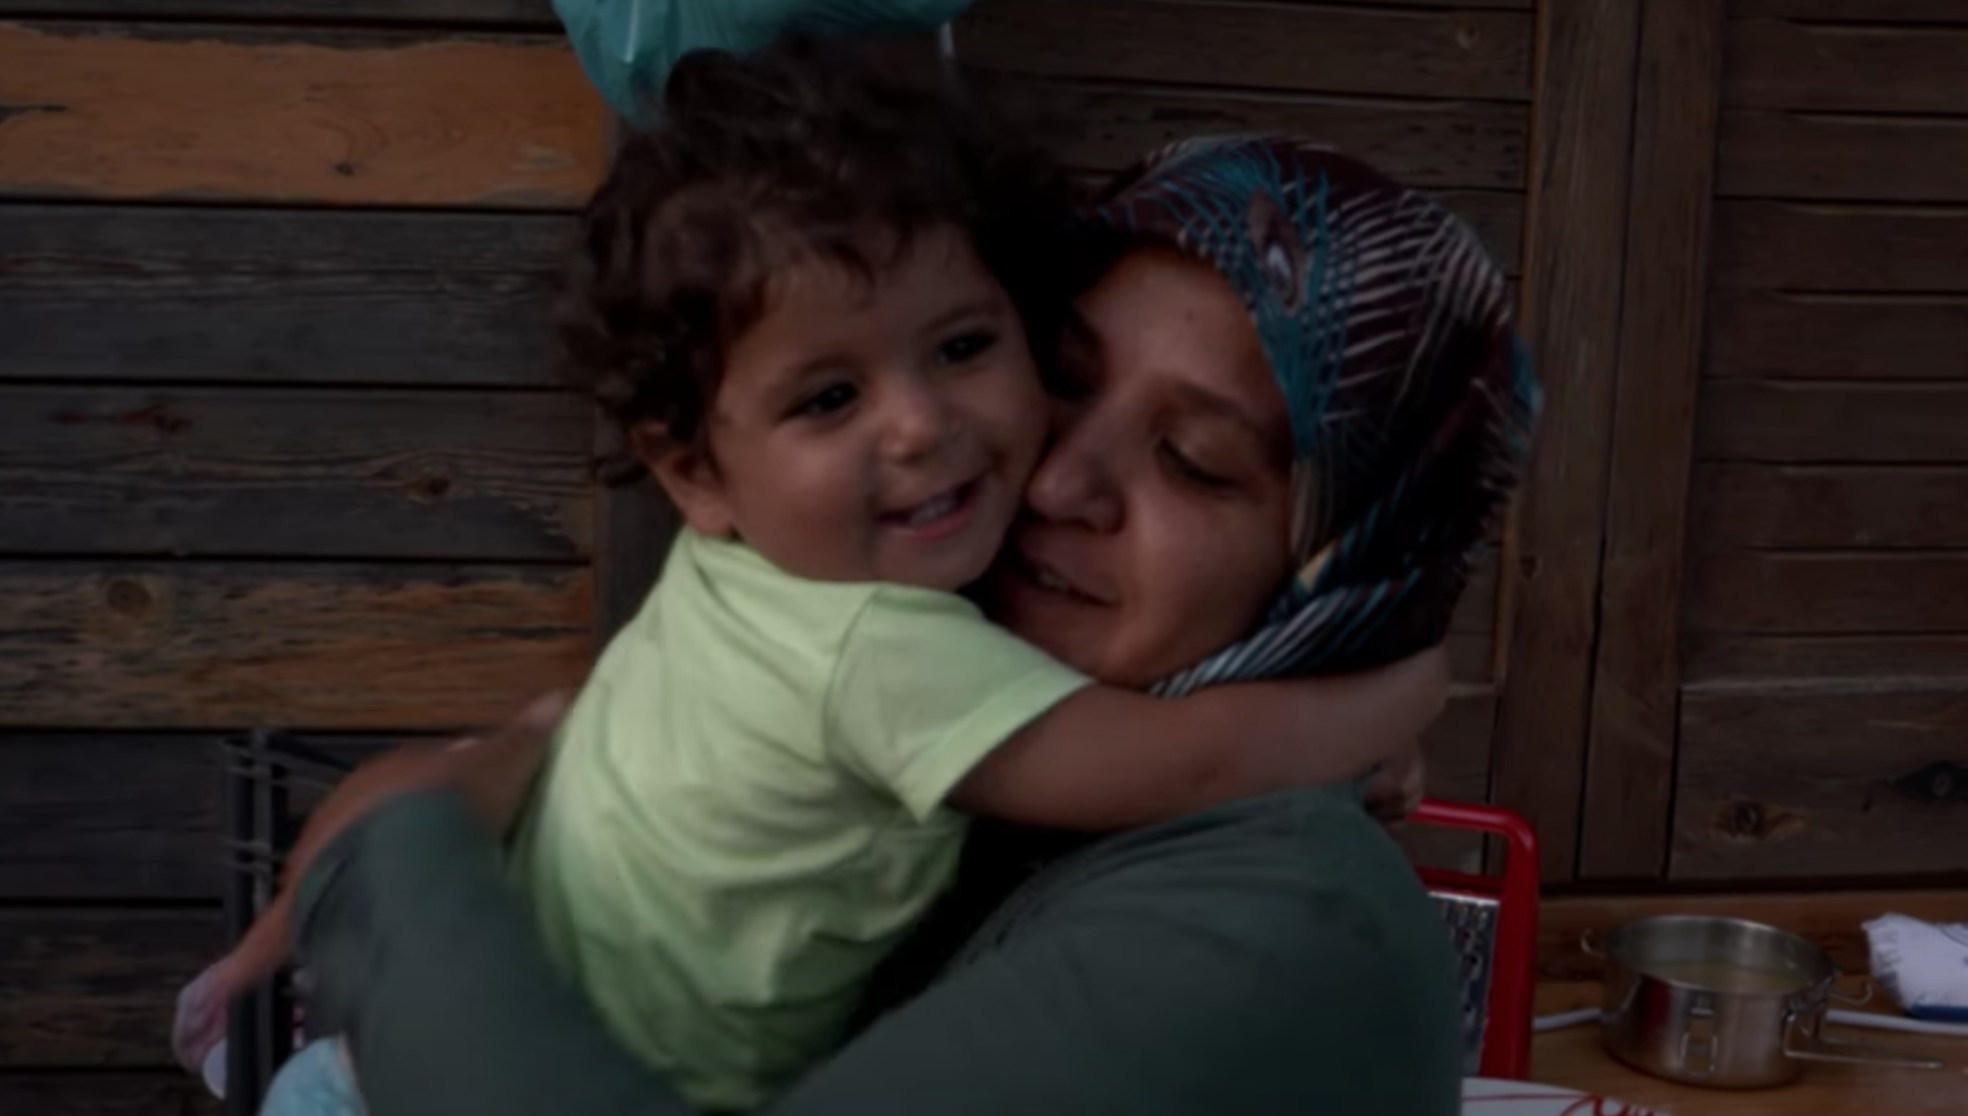 PIKPA-opvangkamp op Lesbos ontruimd: ‘Het slaat nergens op’